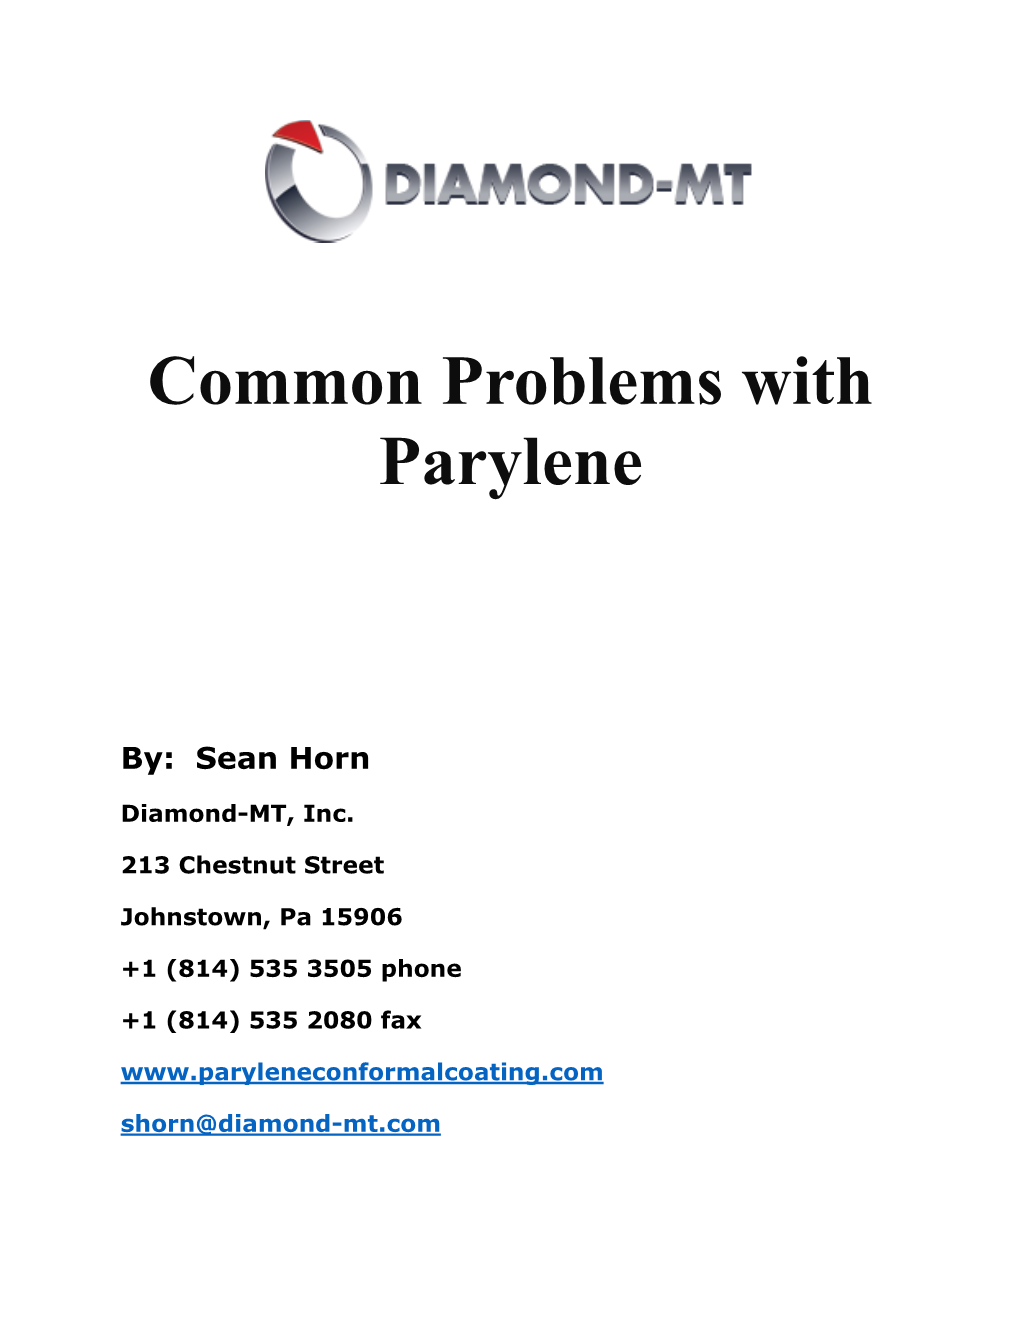 Common Problems with Parylene